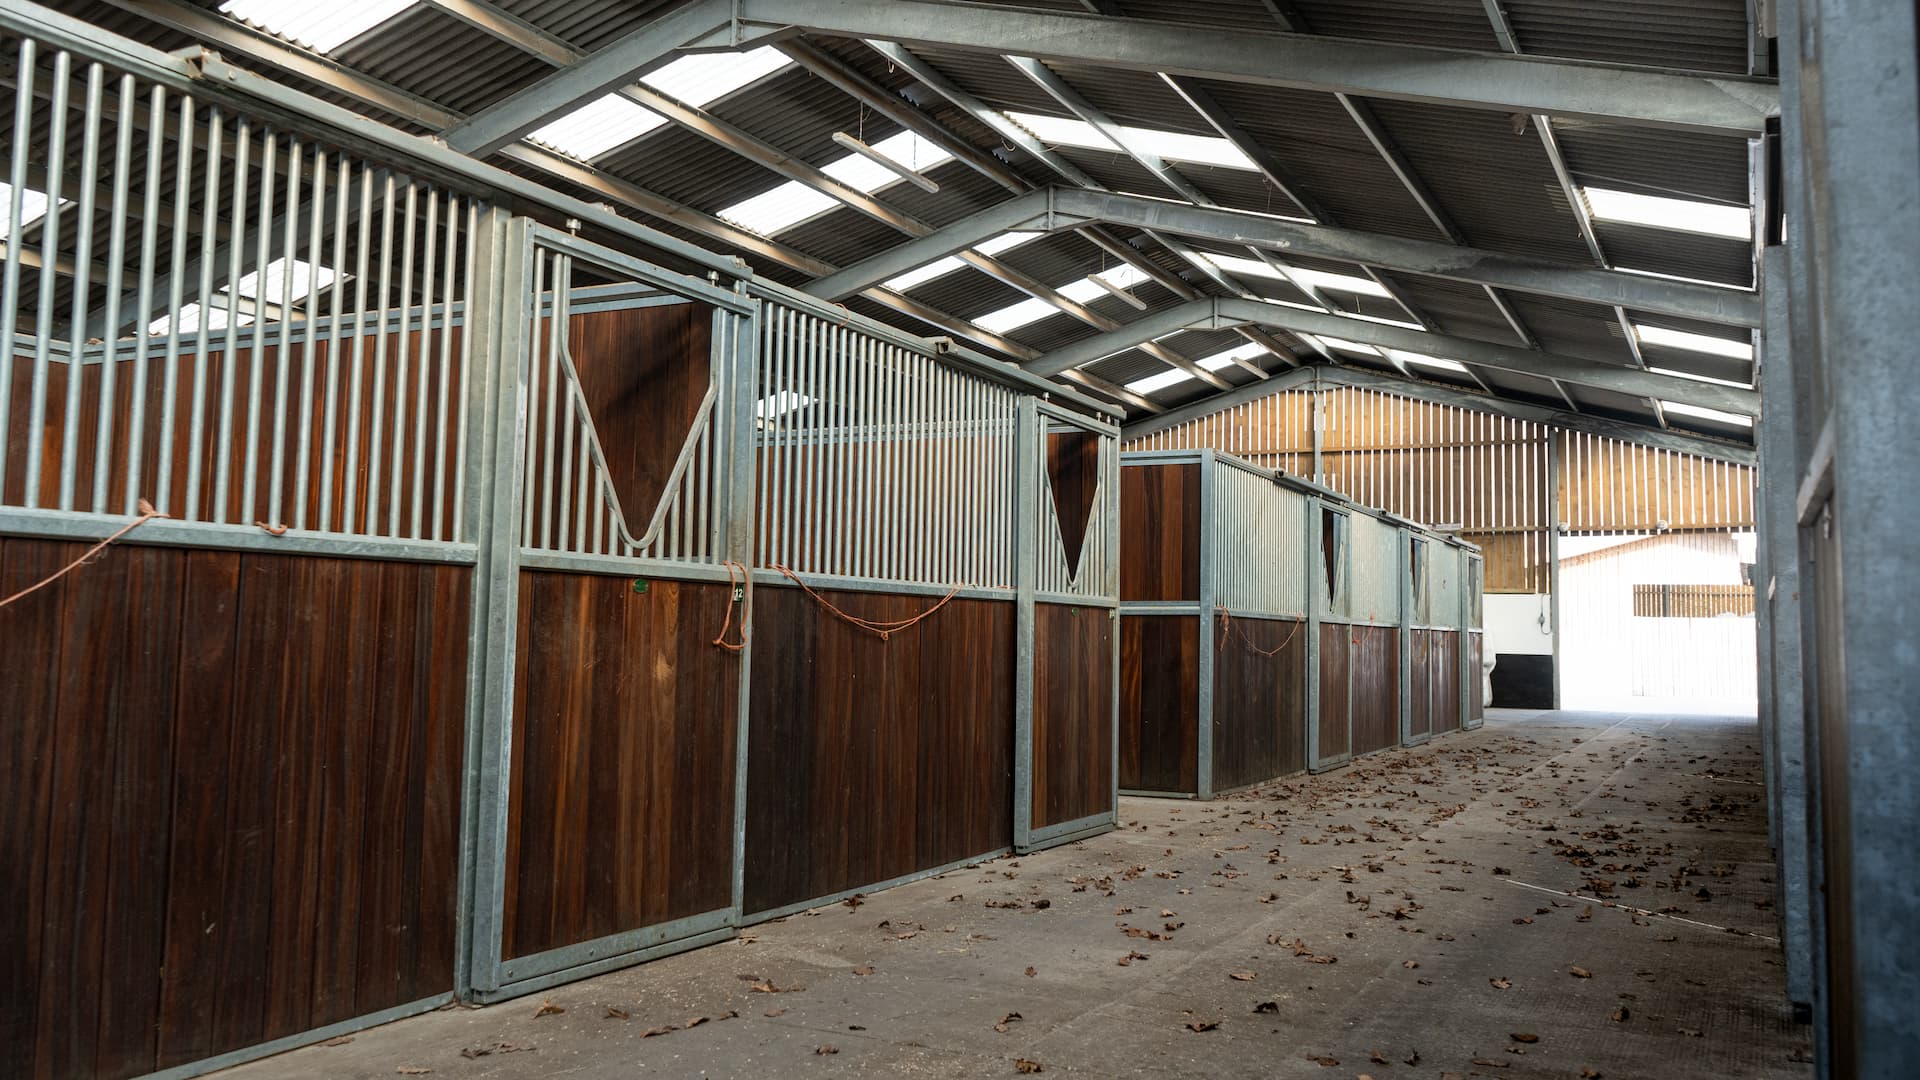 World Class Equestrian Facility uses EUROSIX Fibre Cement Sheets